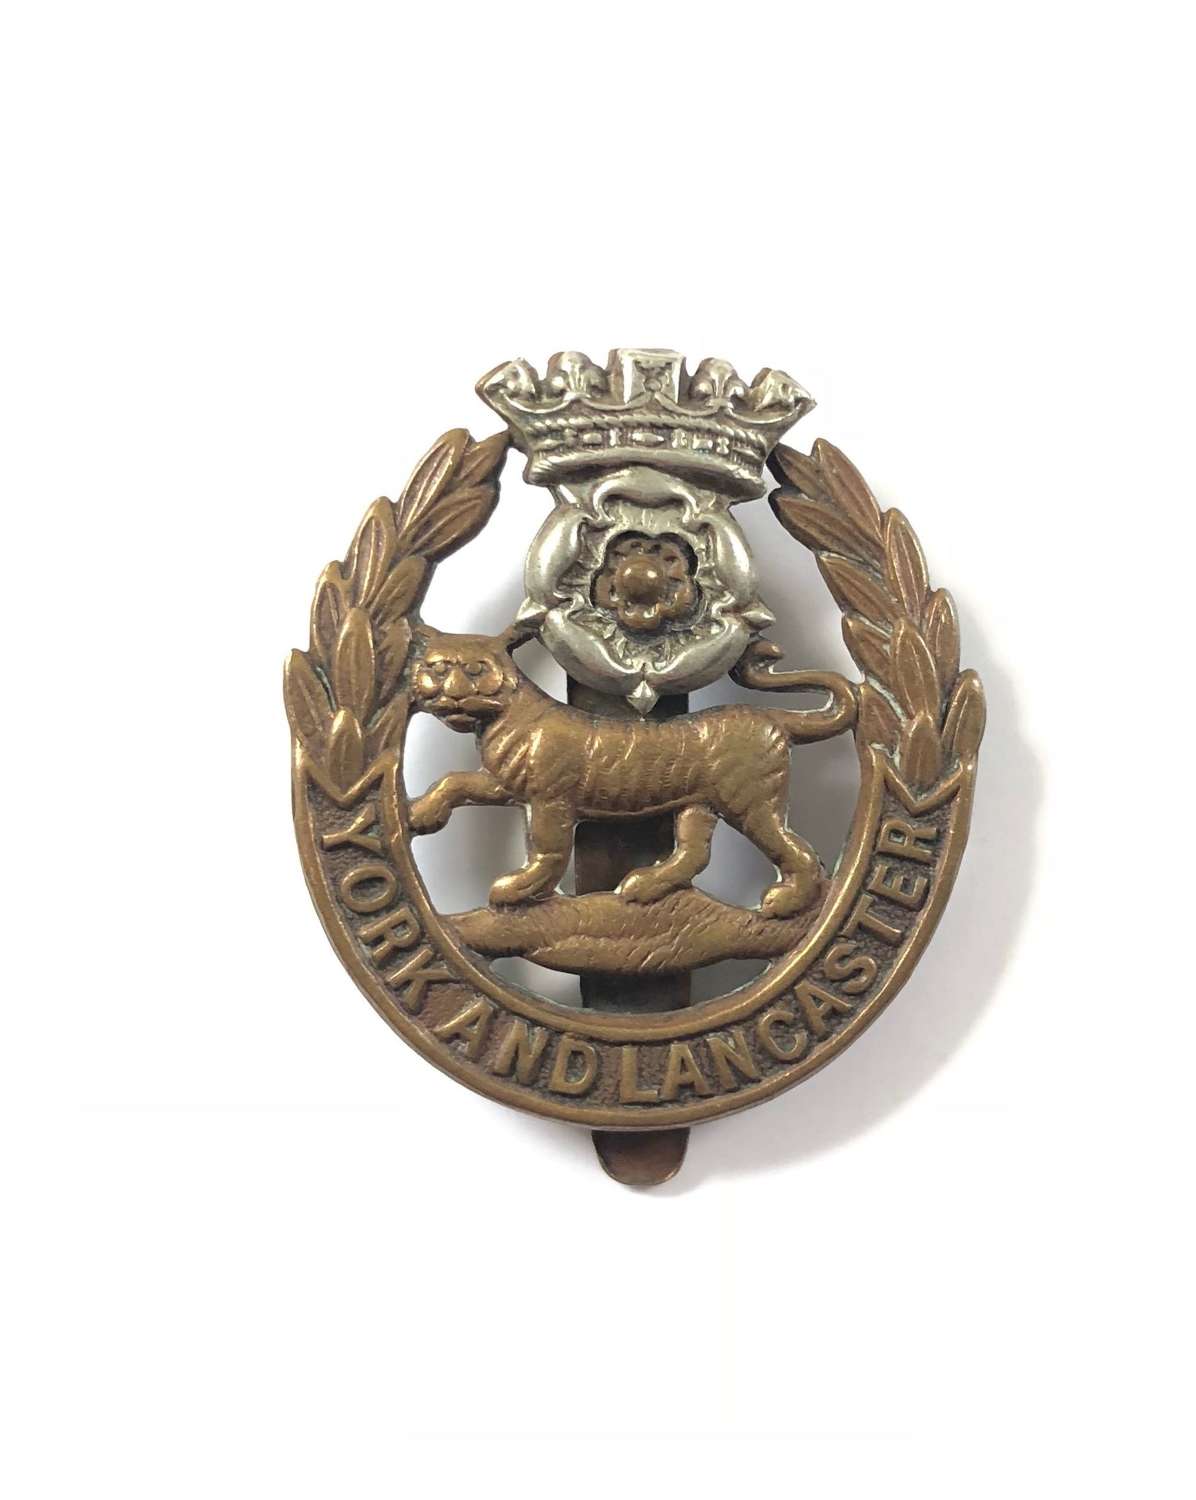 WW1/ WW2 York & Lancs Regiment Cap Badge.